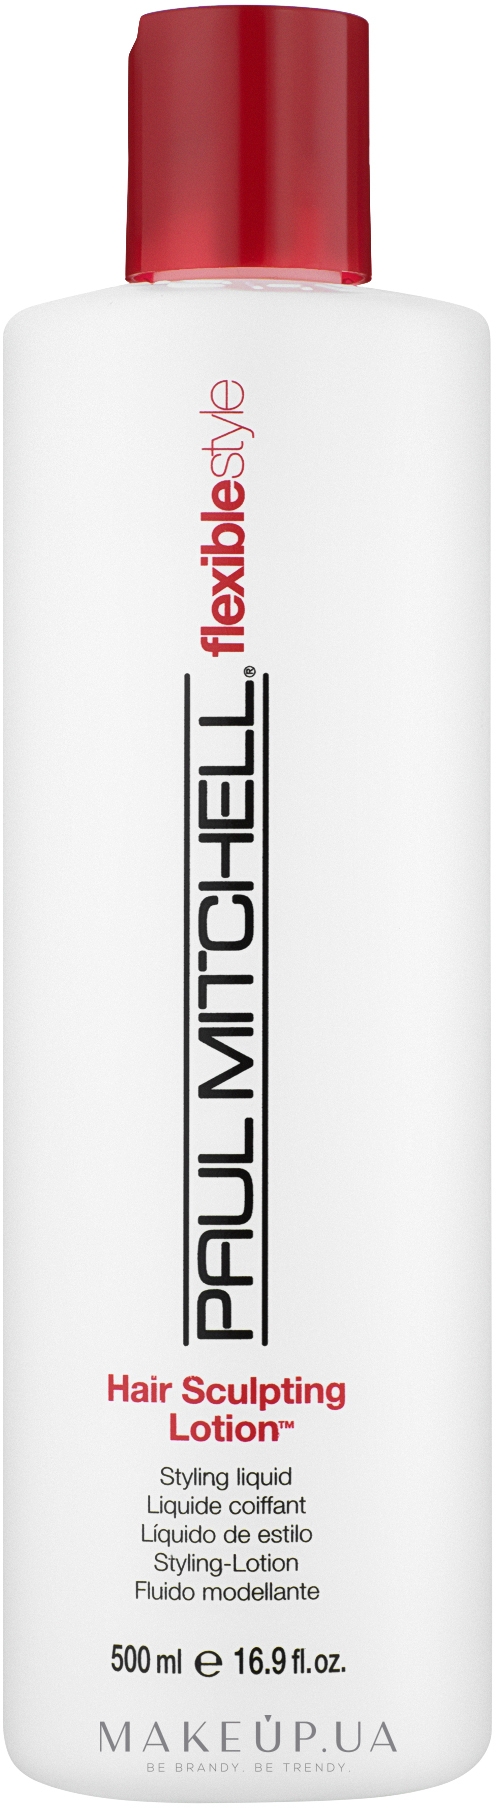 Универсальный лосьон для укладки - Paul Mitchell Flexible Style Hair Sculpting Lotion — фото 500ml